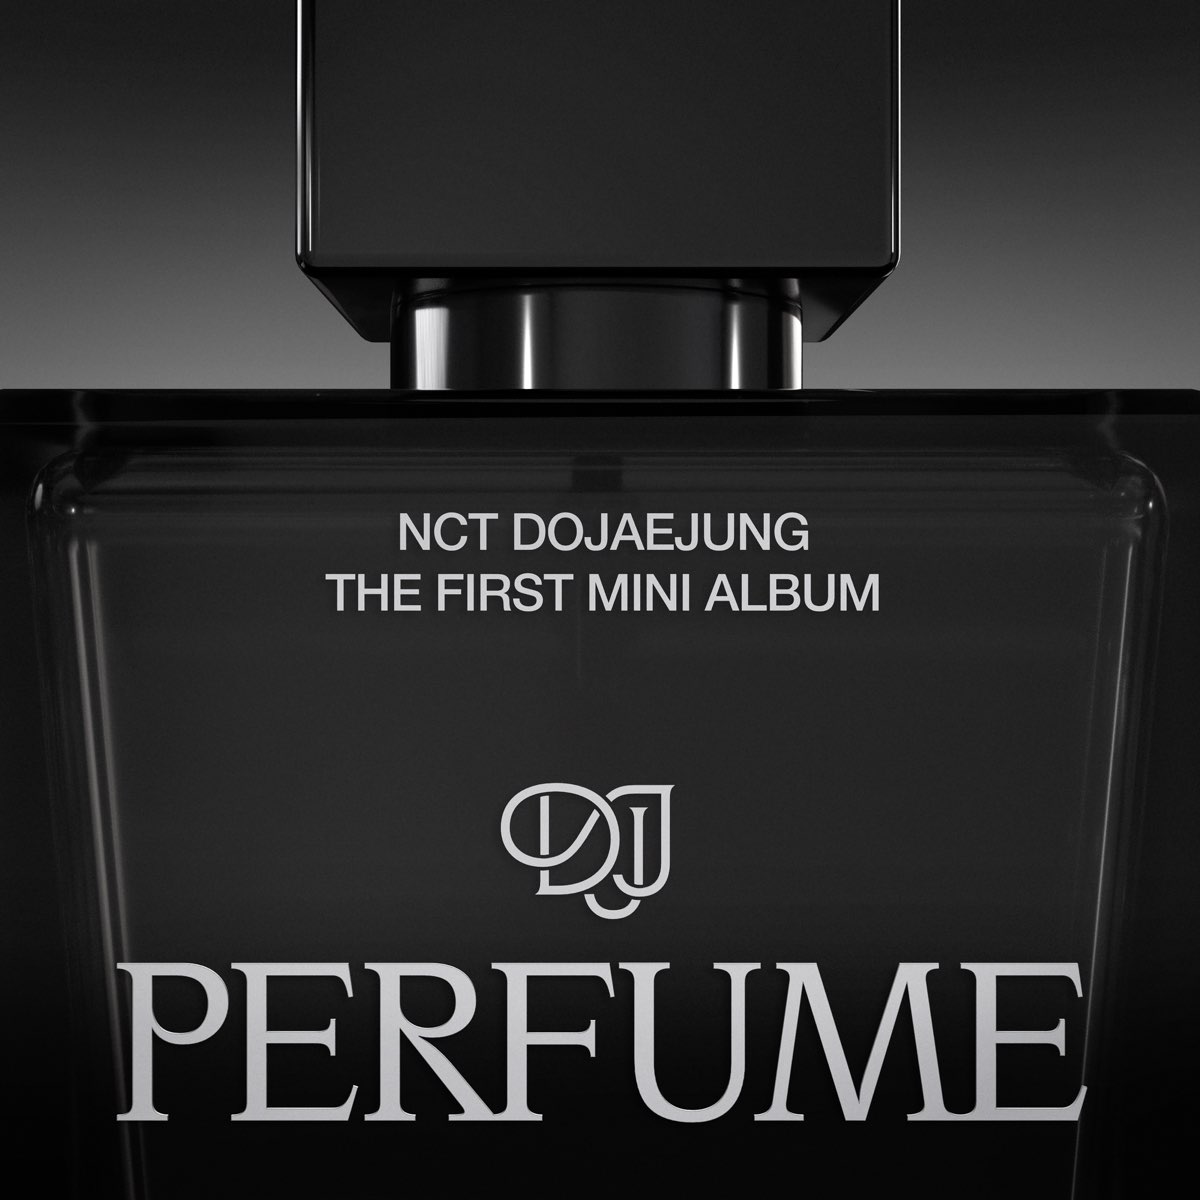 ‎Perfume - The 1st Mini Album - EP by NCT DOJAEJUNG on Apple Music